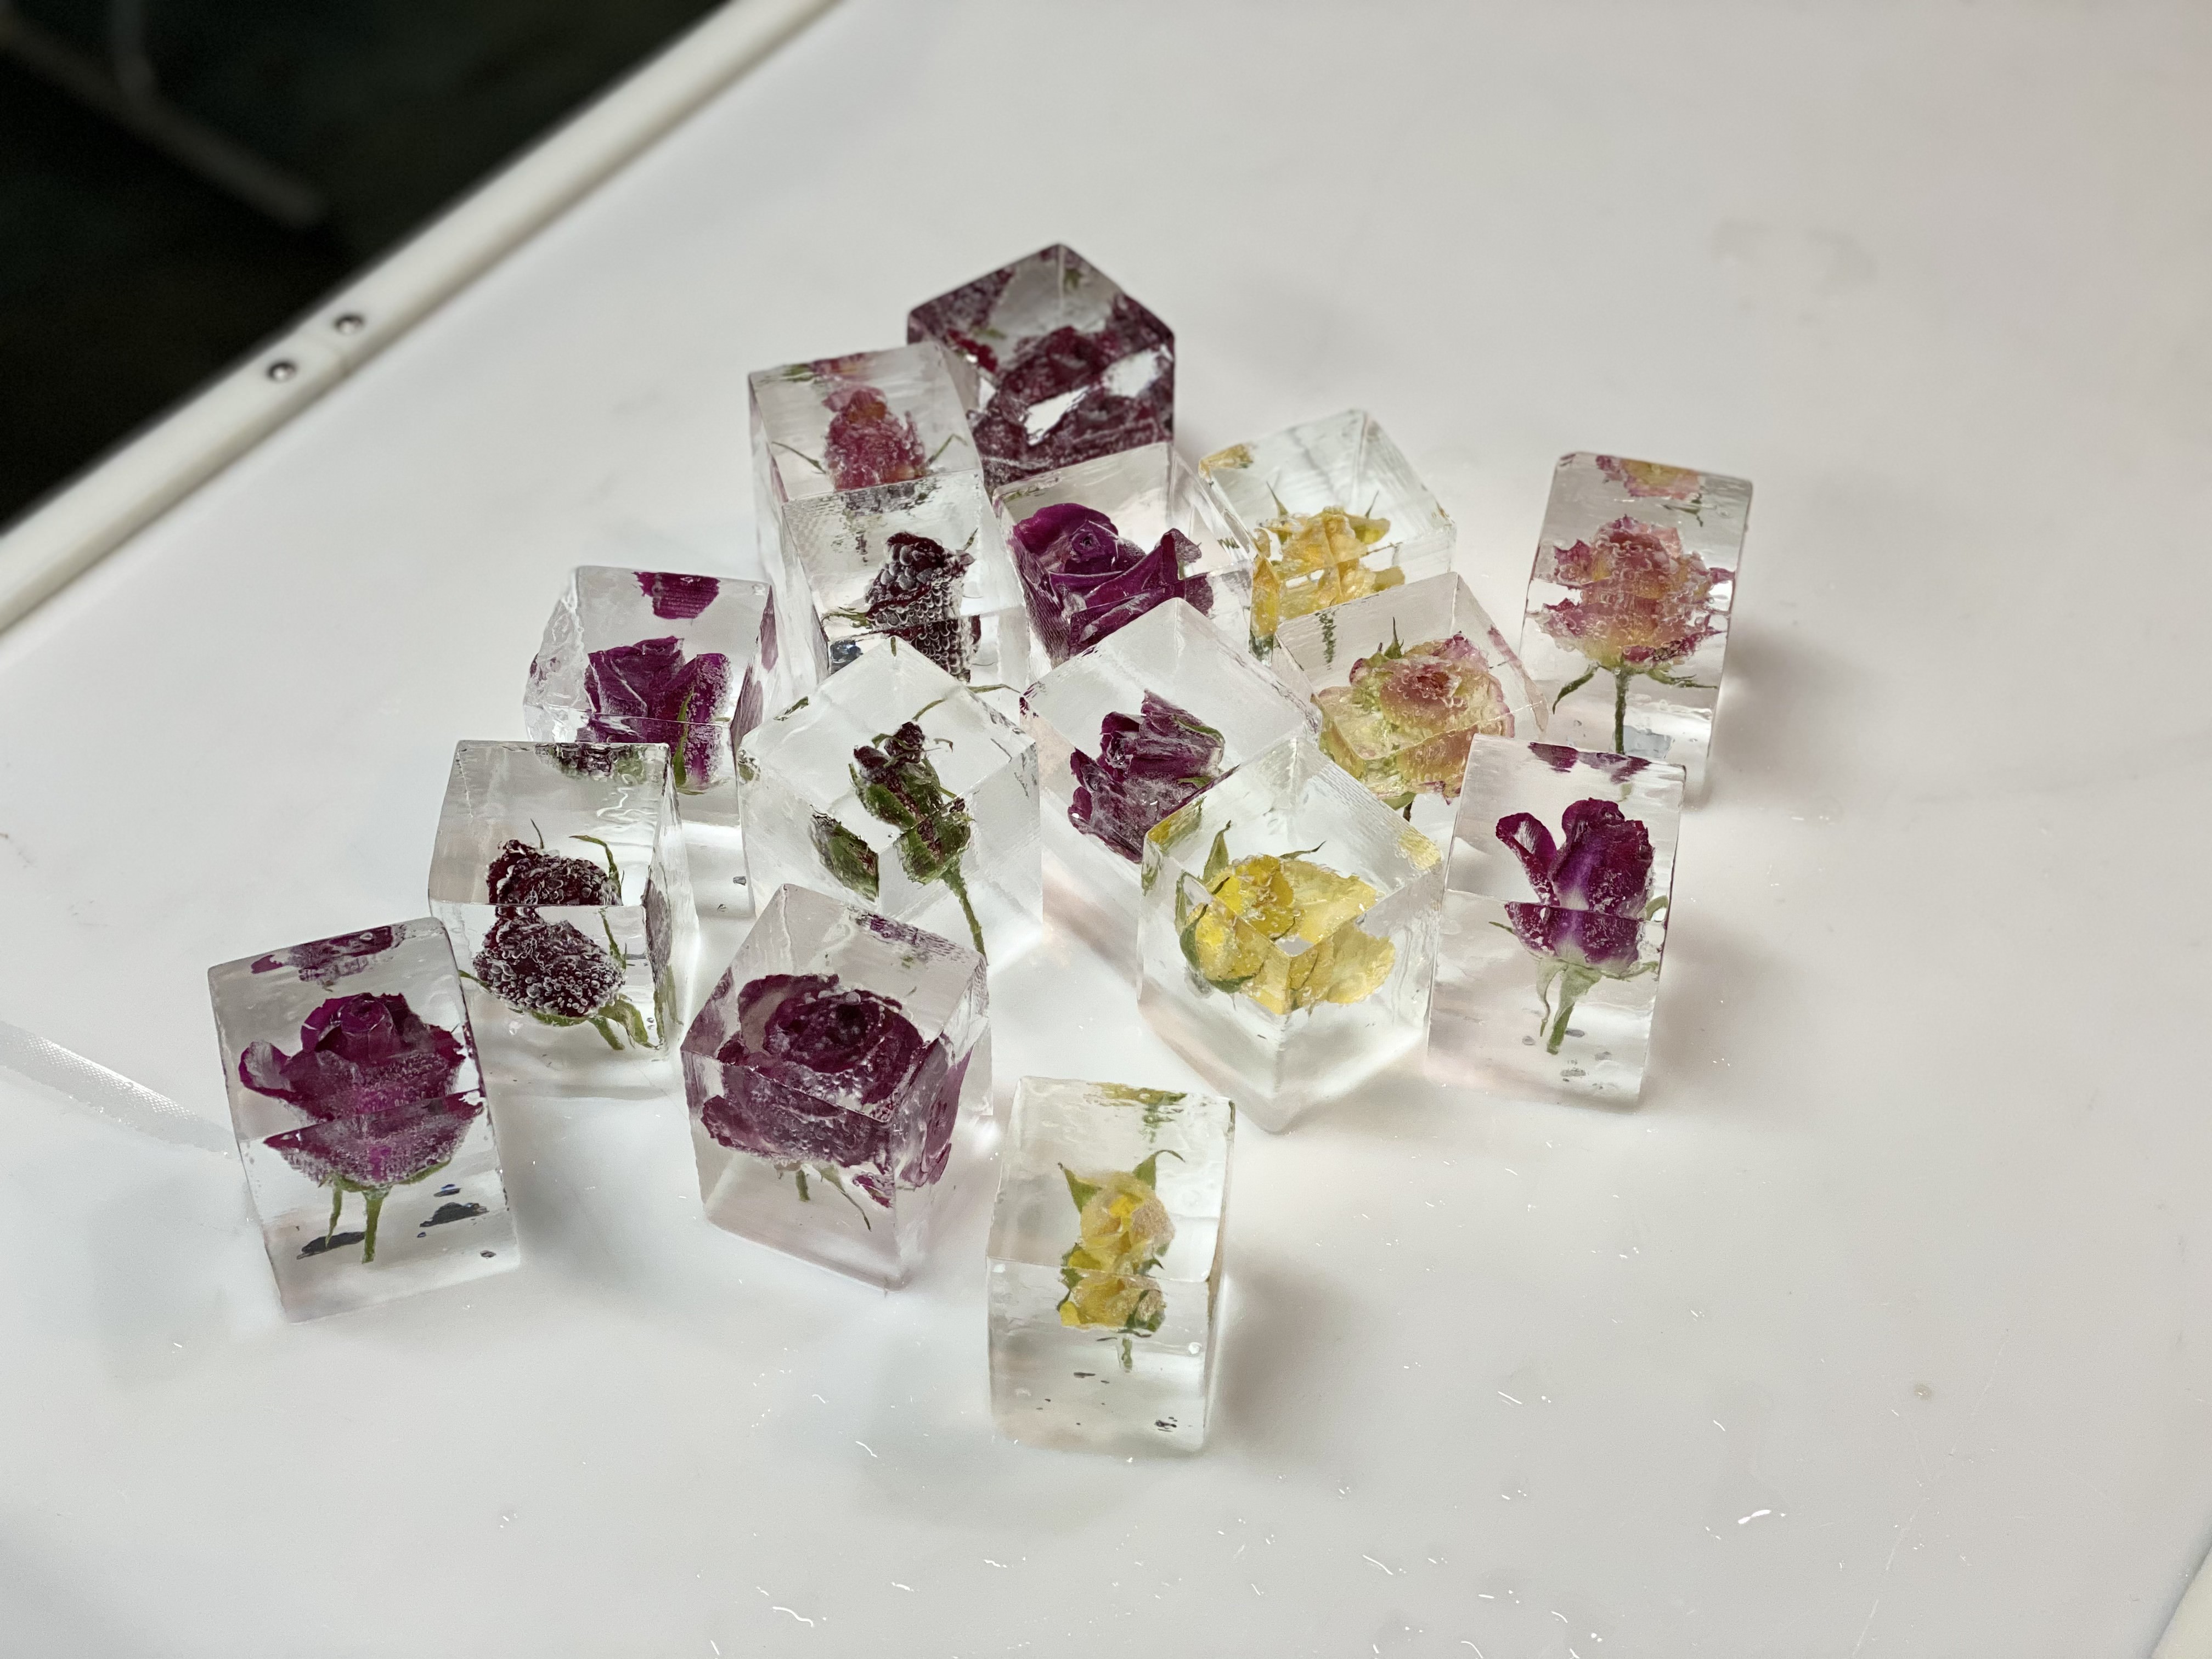 An image of botanical infused Block Ice.